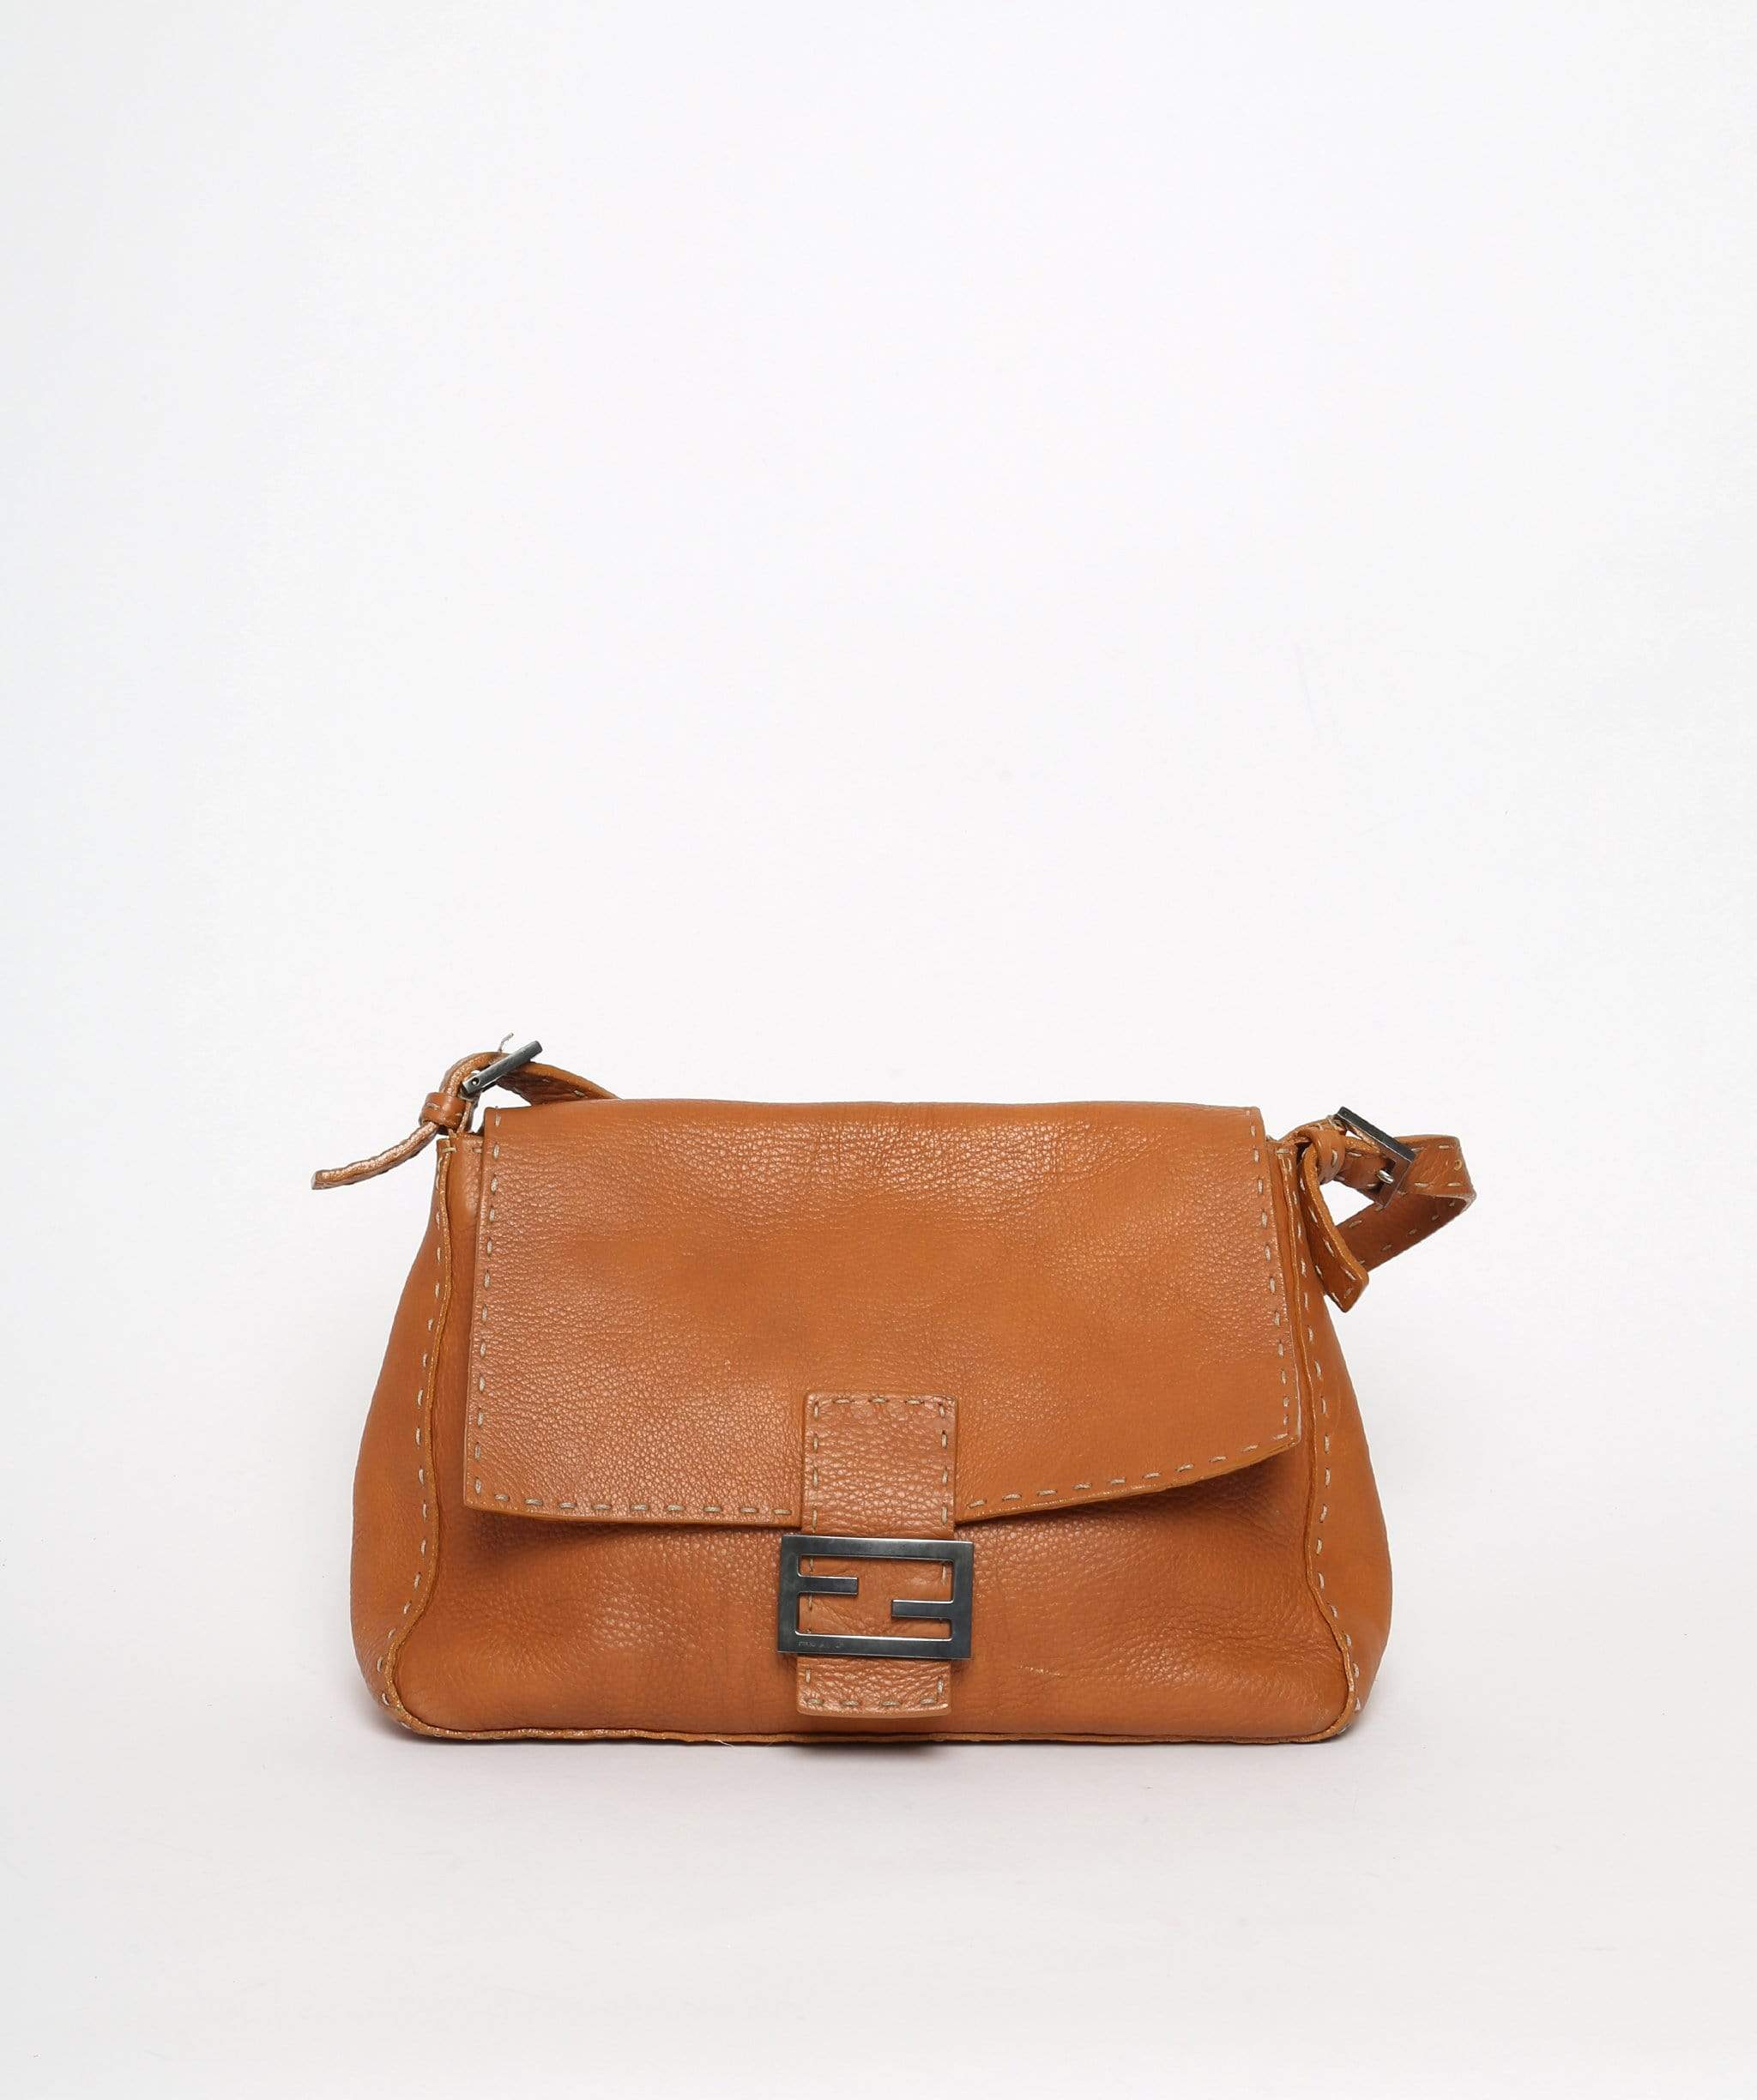 Fendi Fendi Tan Leather Mamma Bag